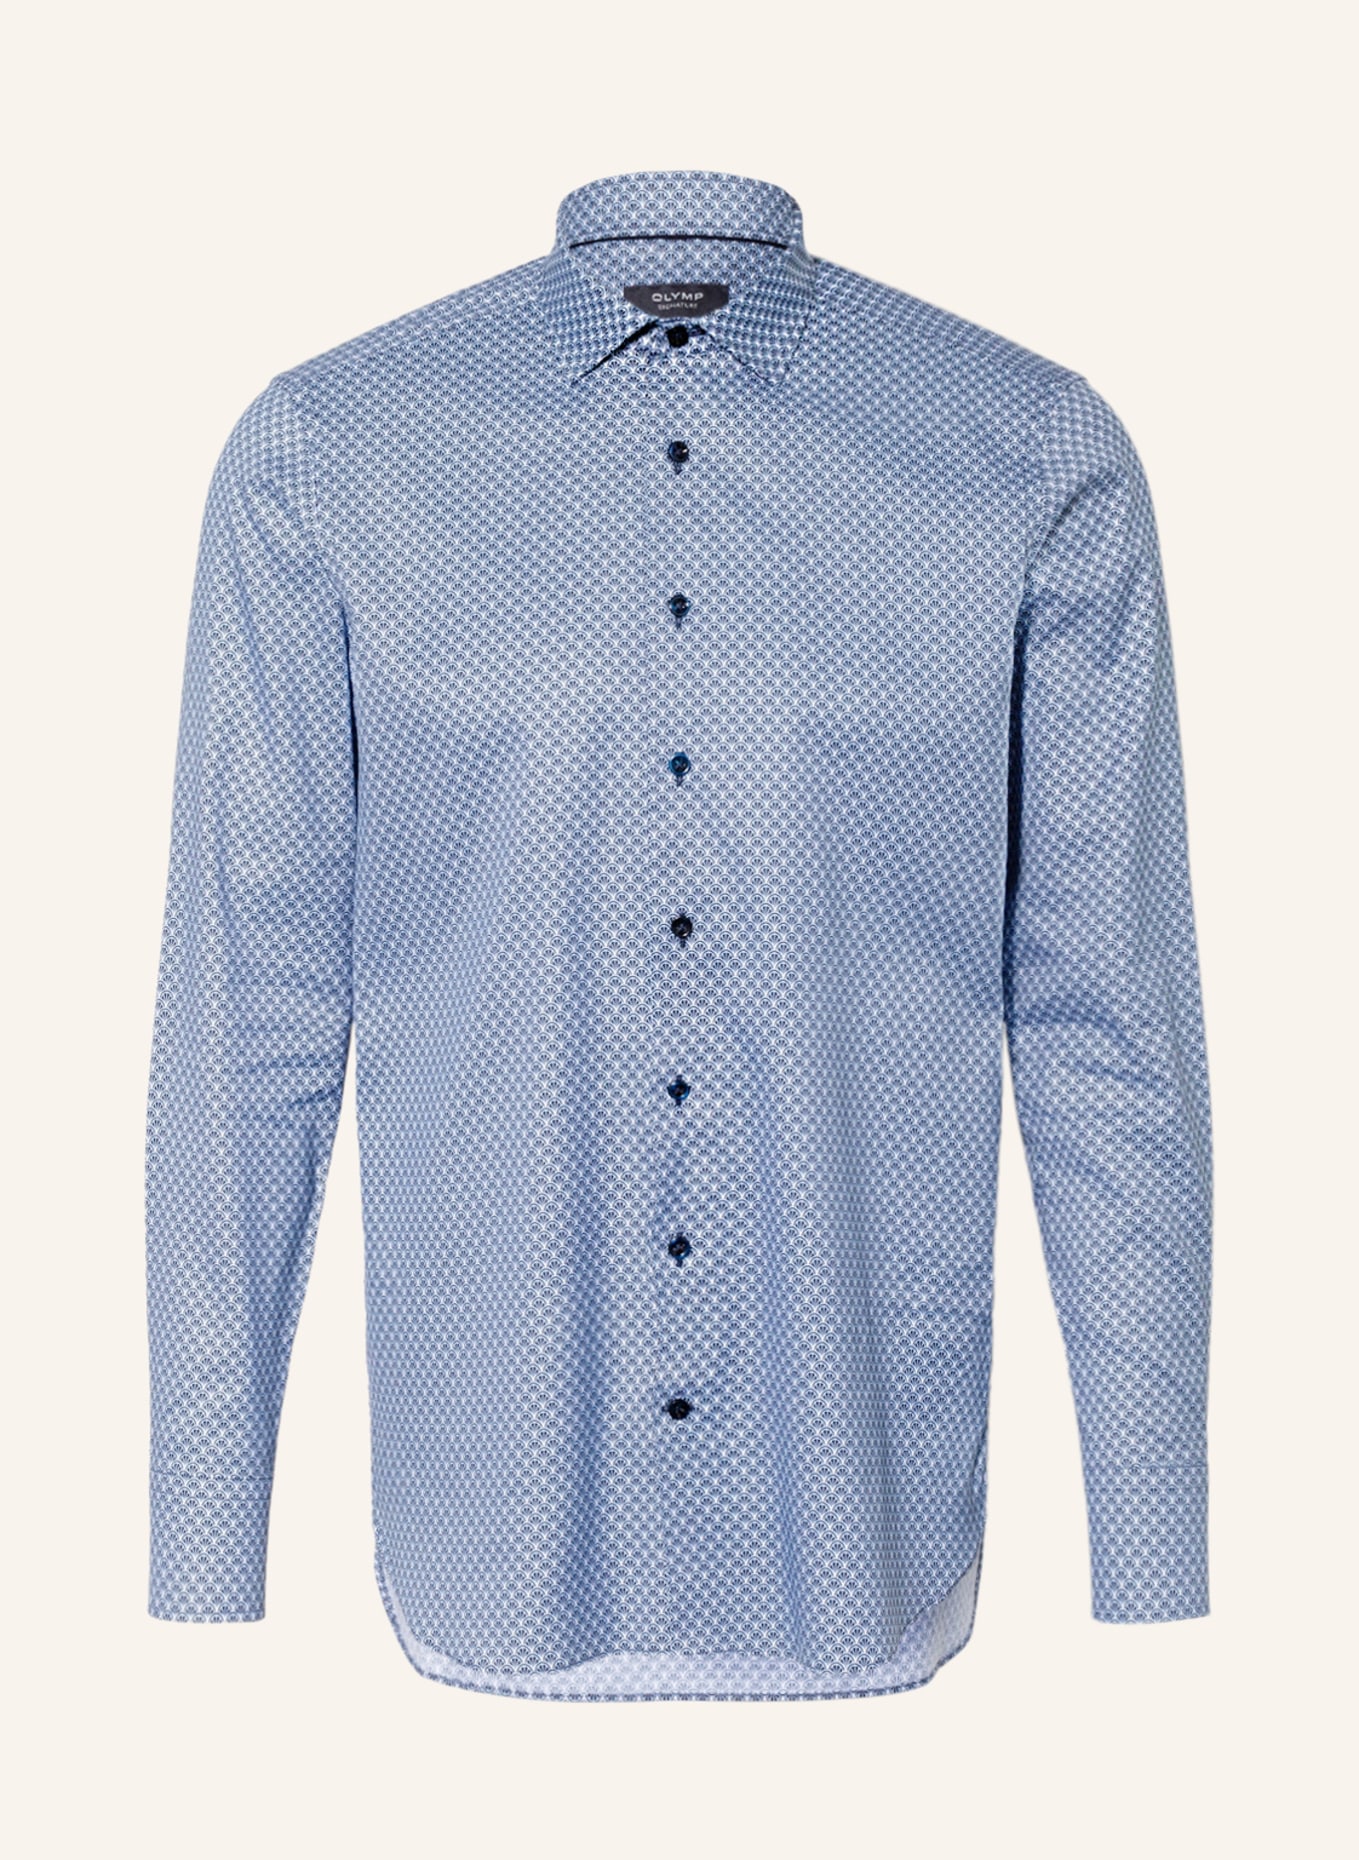 blau/ SIGNATURE fit OLYMP dunkelblau Hemd tailored in